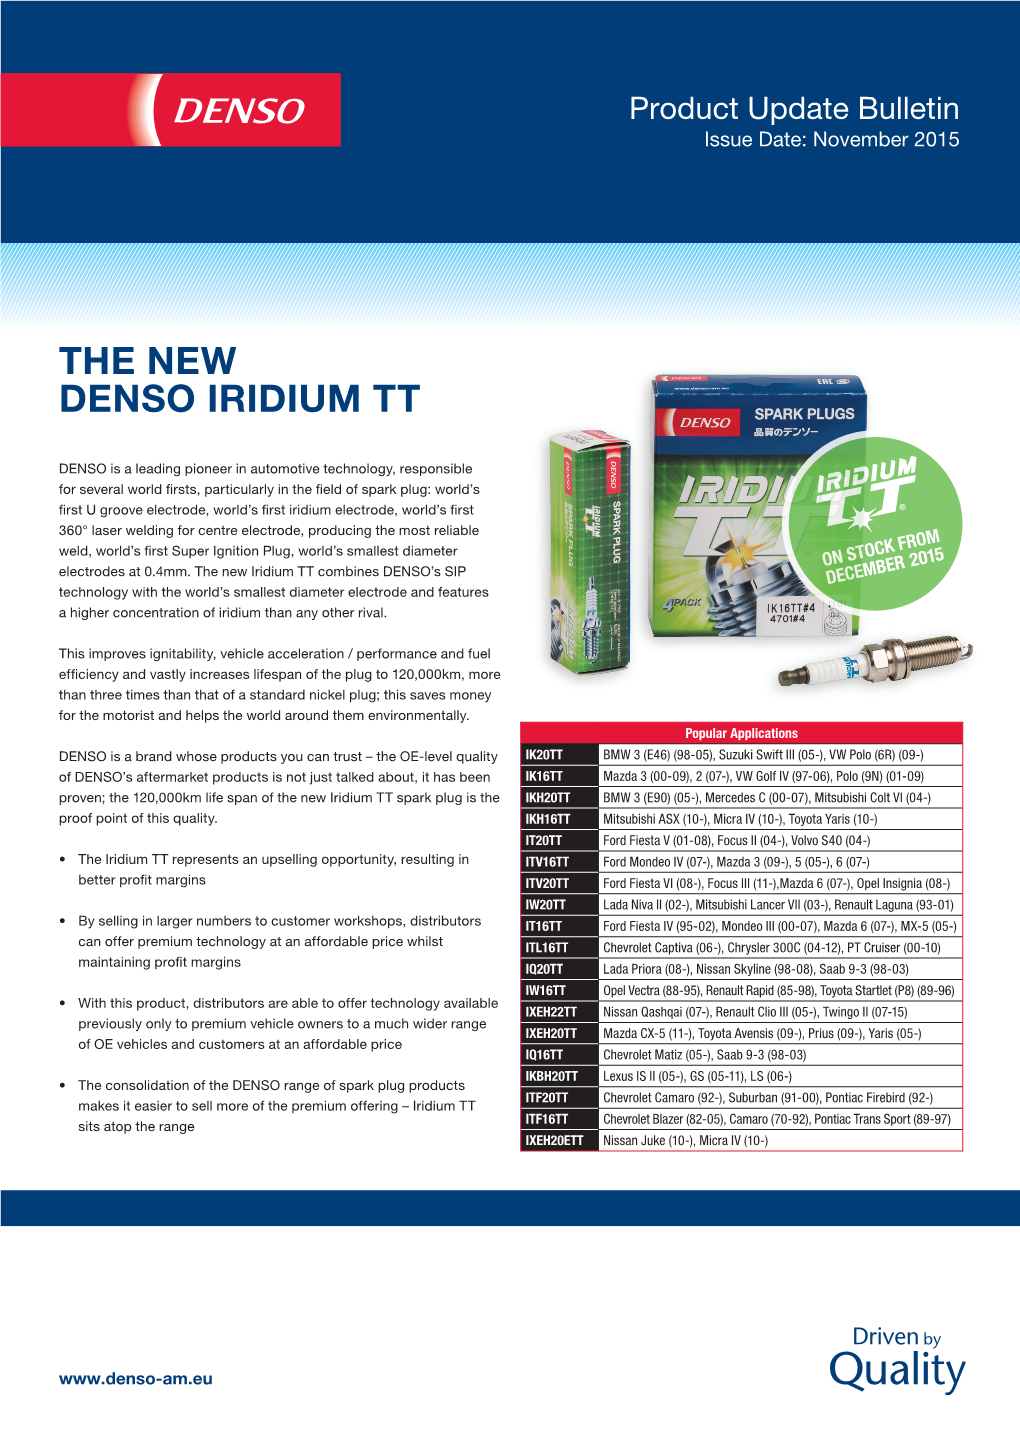 The New DENSO Iridium TT